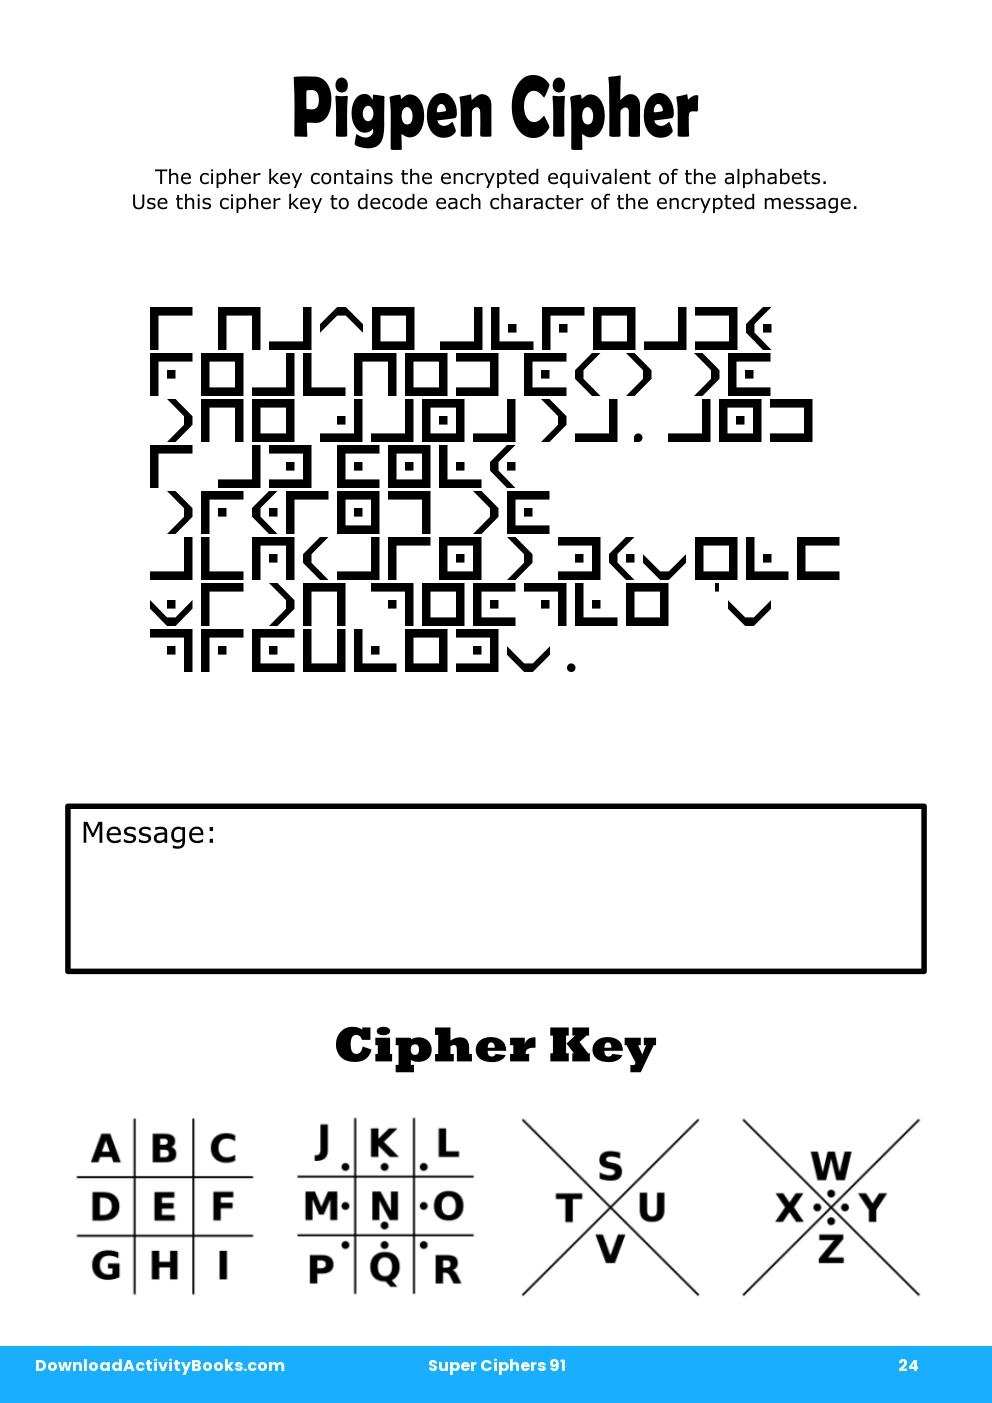 Pigpen Cipher in Super Ciphers 91